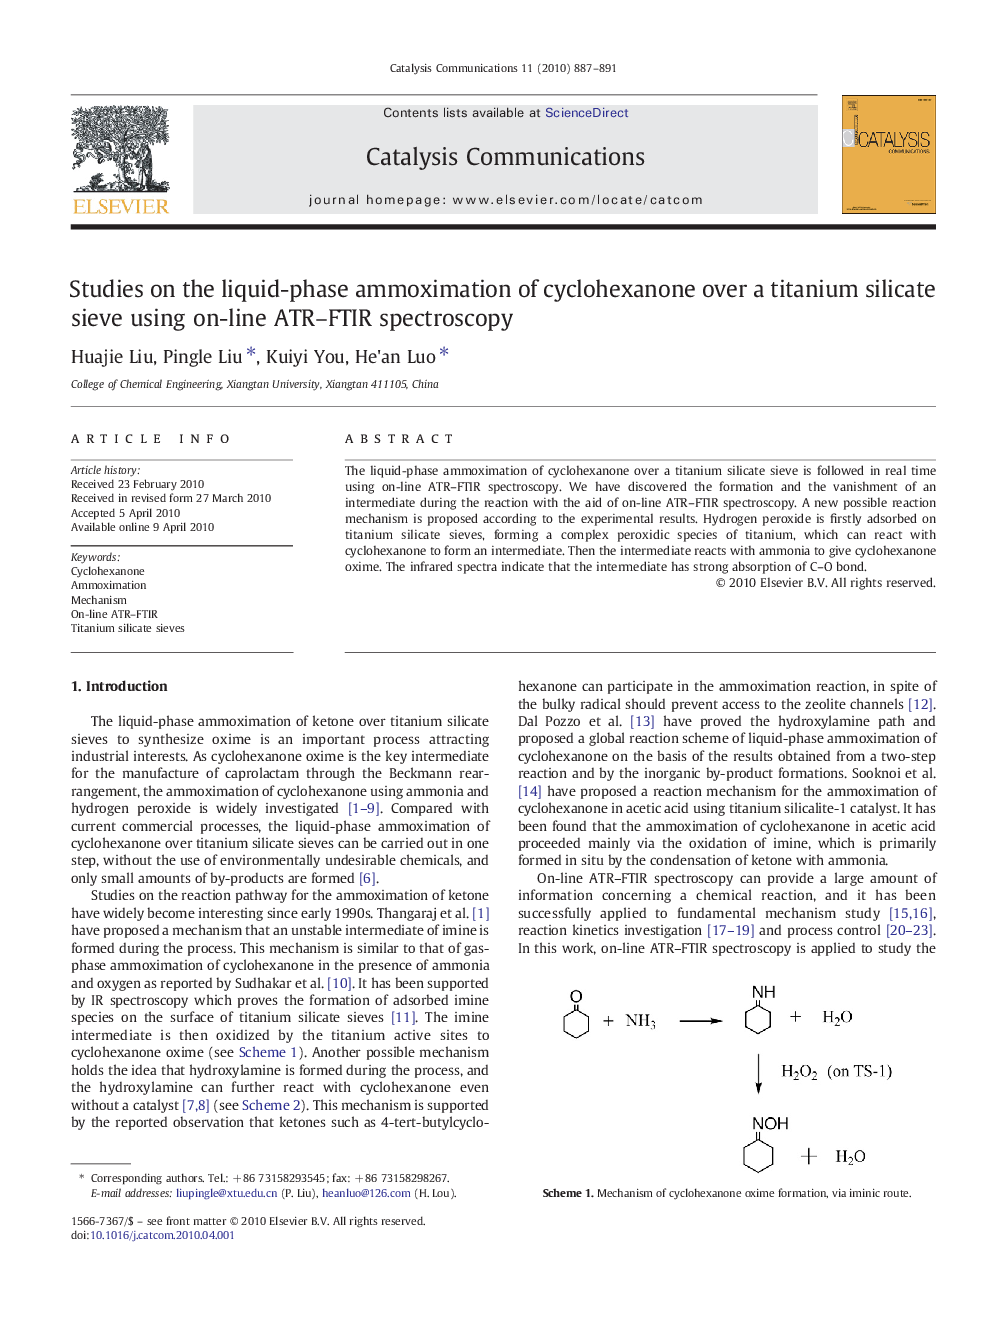 Studies on the liquid-phase ammoximation of cyclohexanone over a titanium silicate sieve using on-line ATR–FTIR spectroscopy